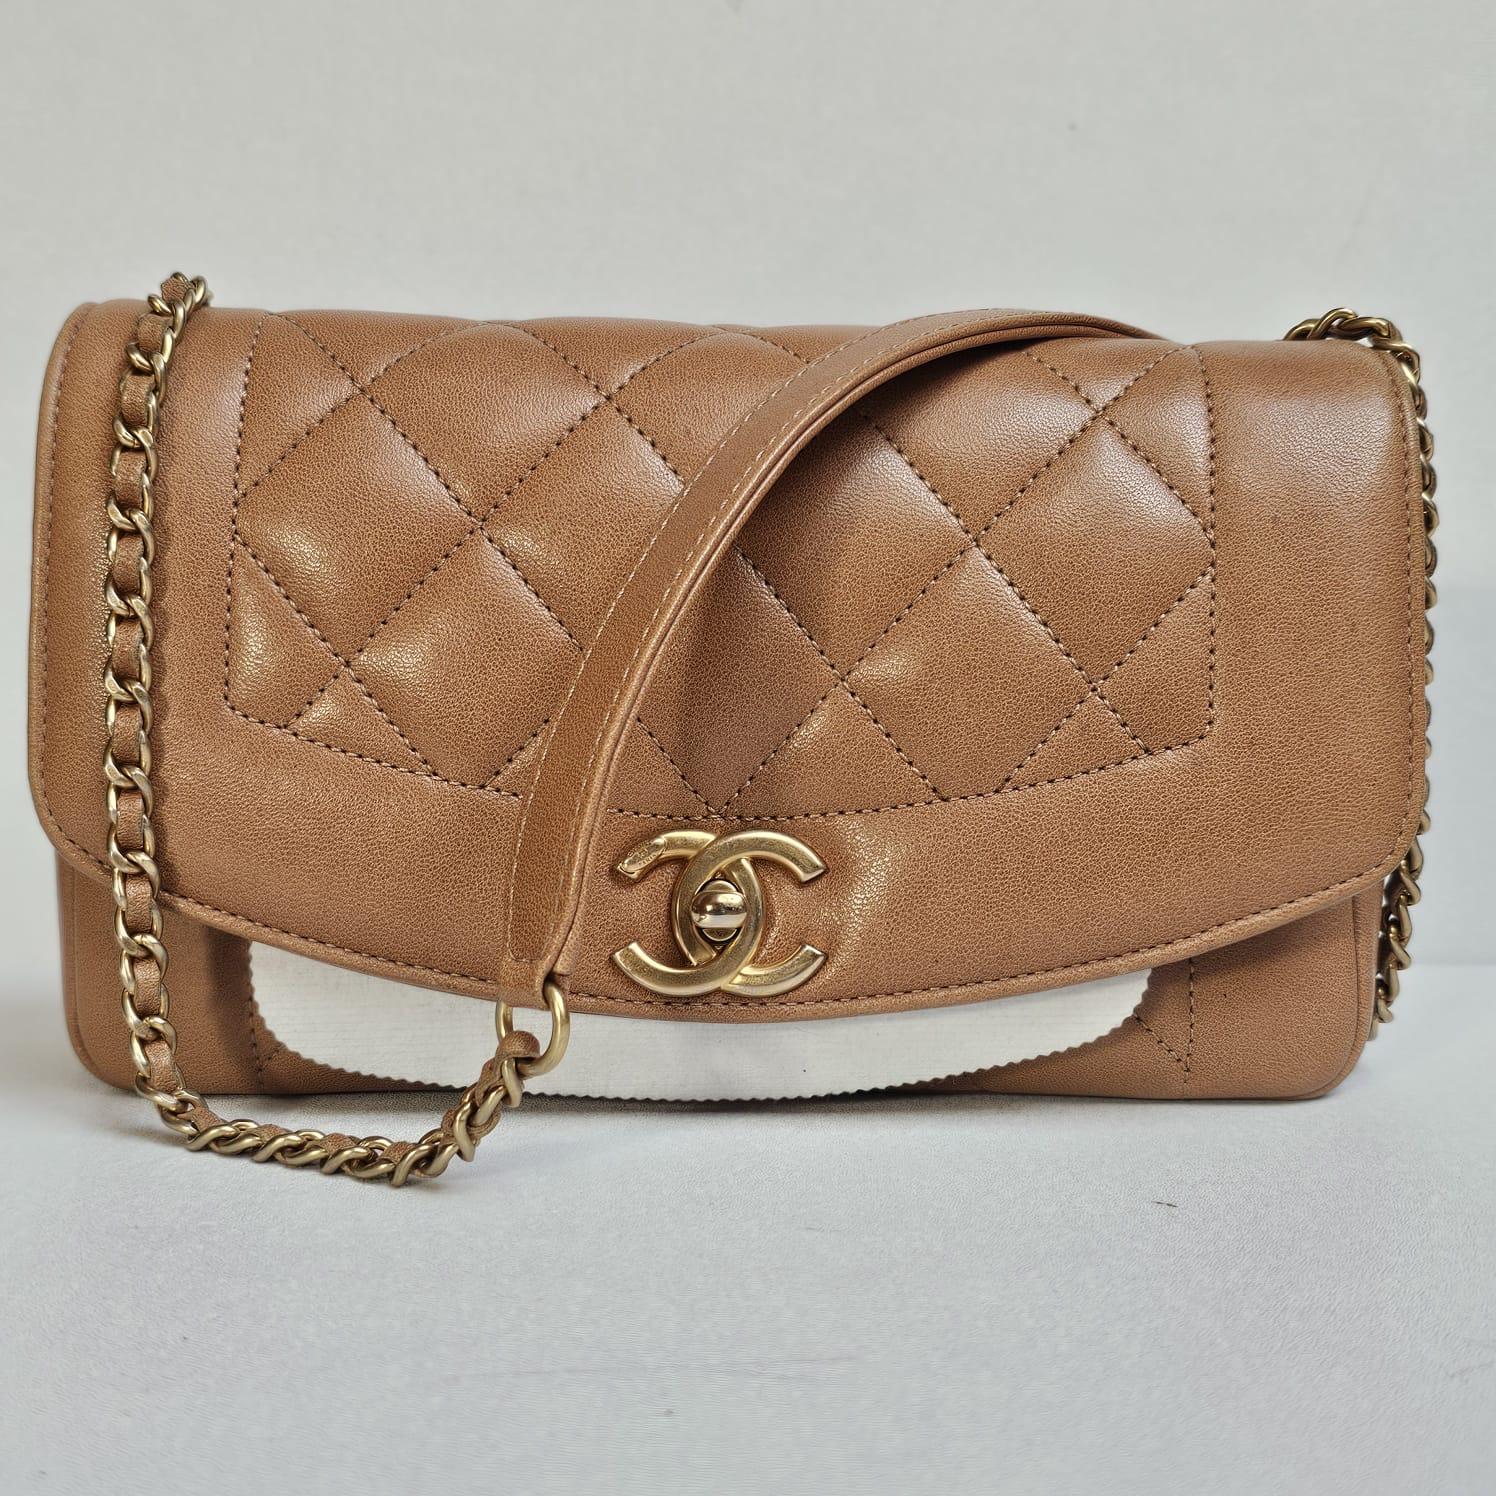 2014-2015 Chanel Caramel Diana Flap Bag For Sale 5